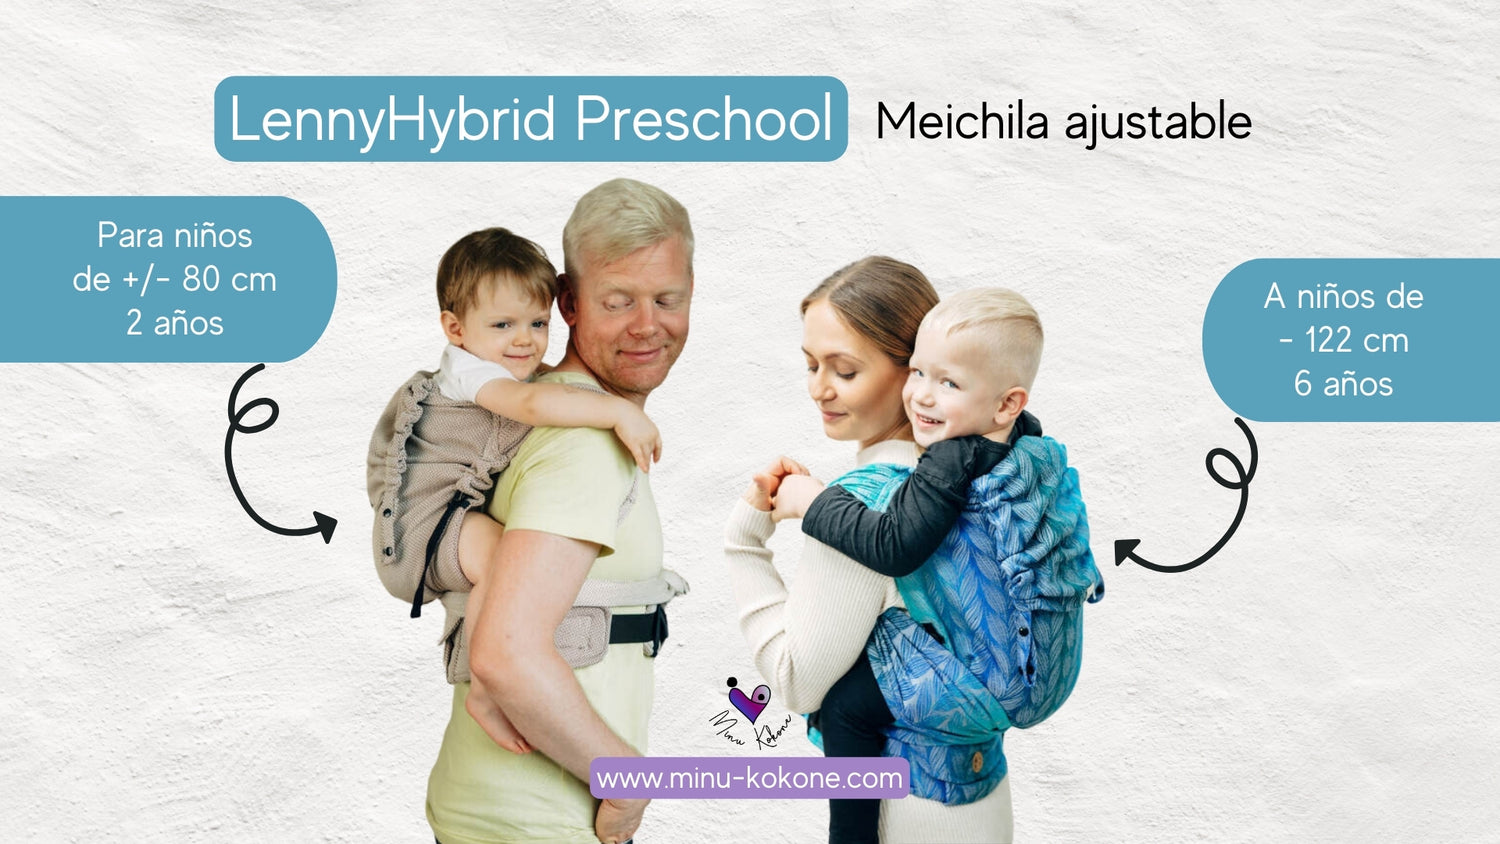 LennyHybrid preschool